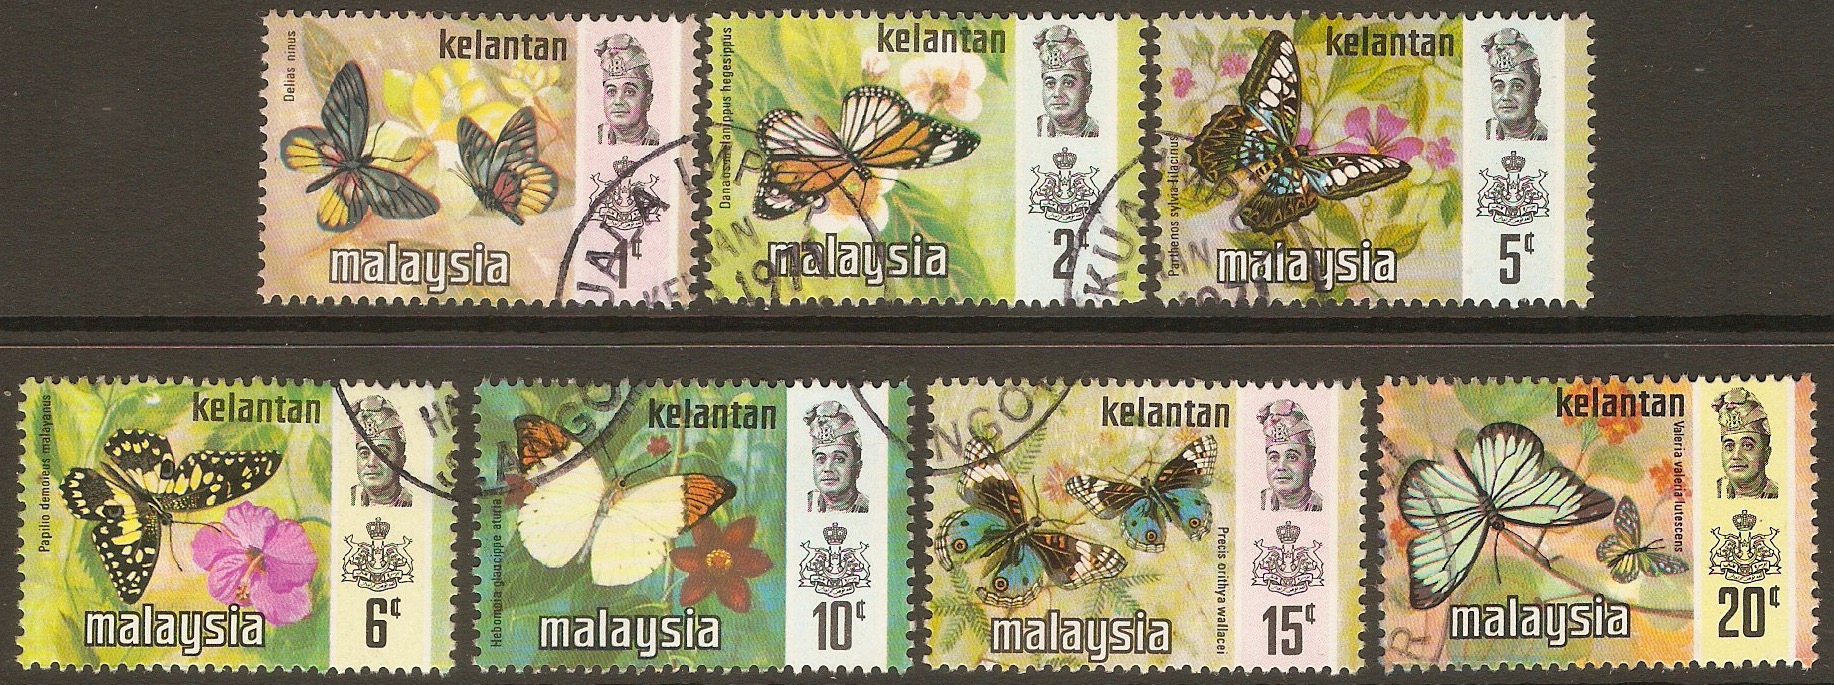 Kelantan 1971 Butterflies set. SG112-SG118.